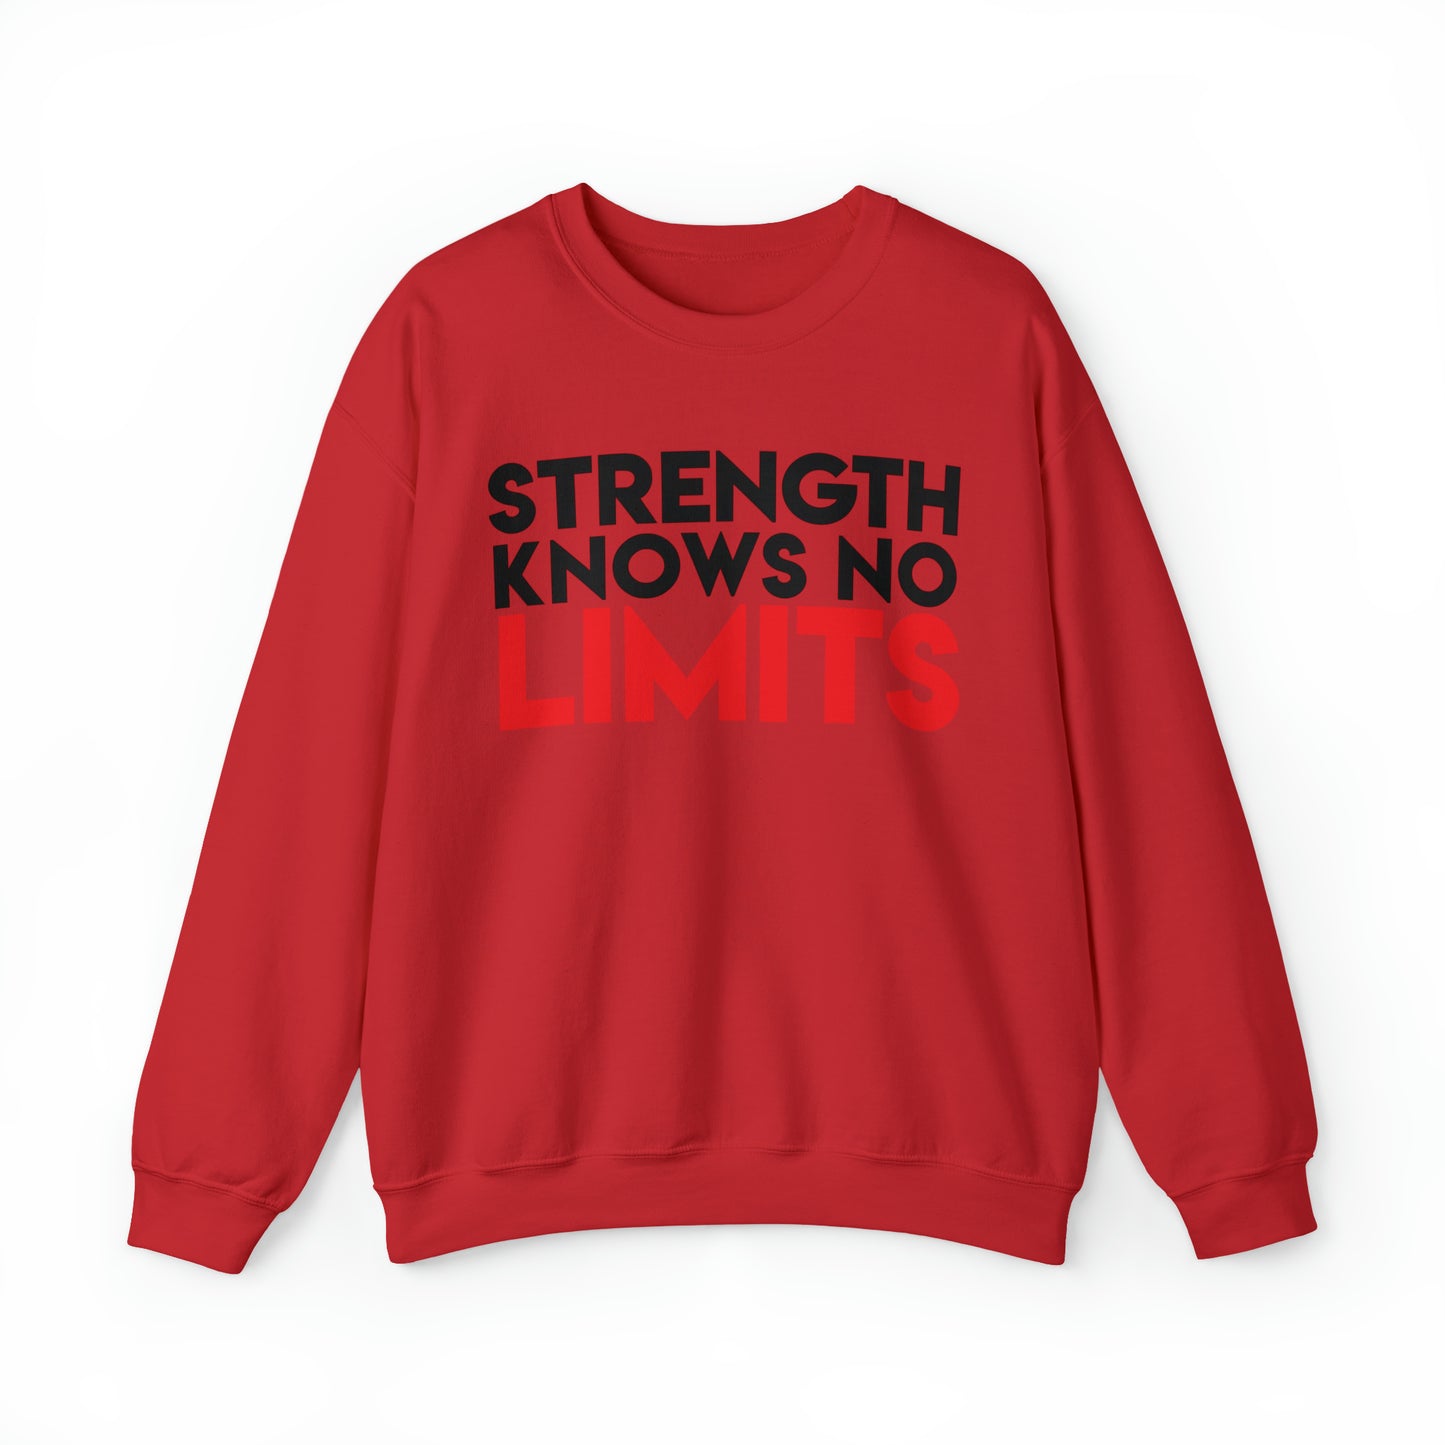 "Strength Knows no Limits" Unisex Crewneck Sweatshirt